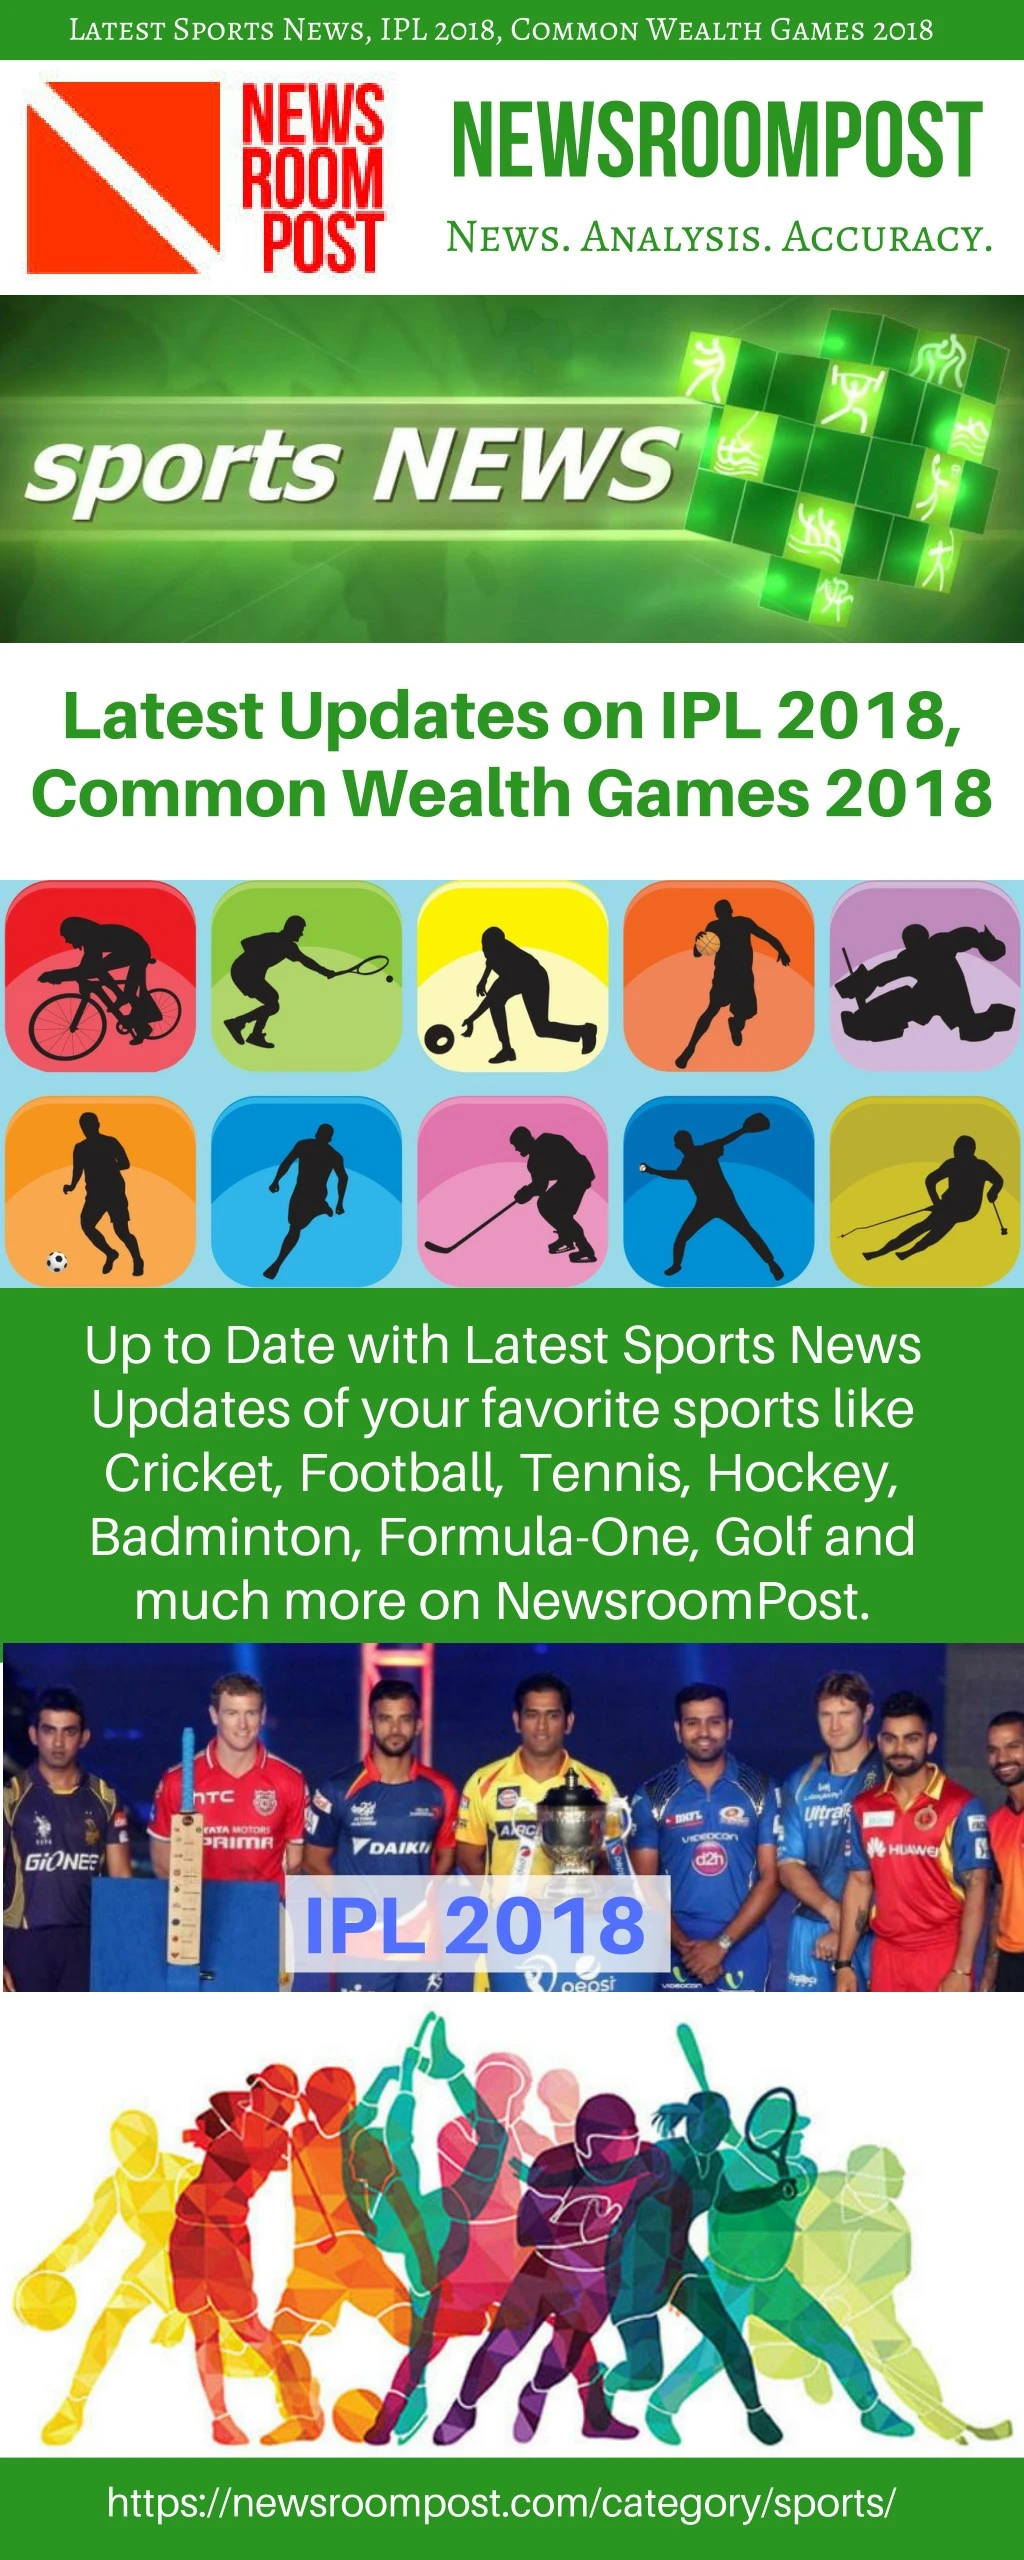 latest sports news ipl 2018 common wealth games